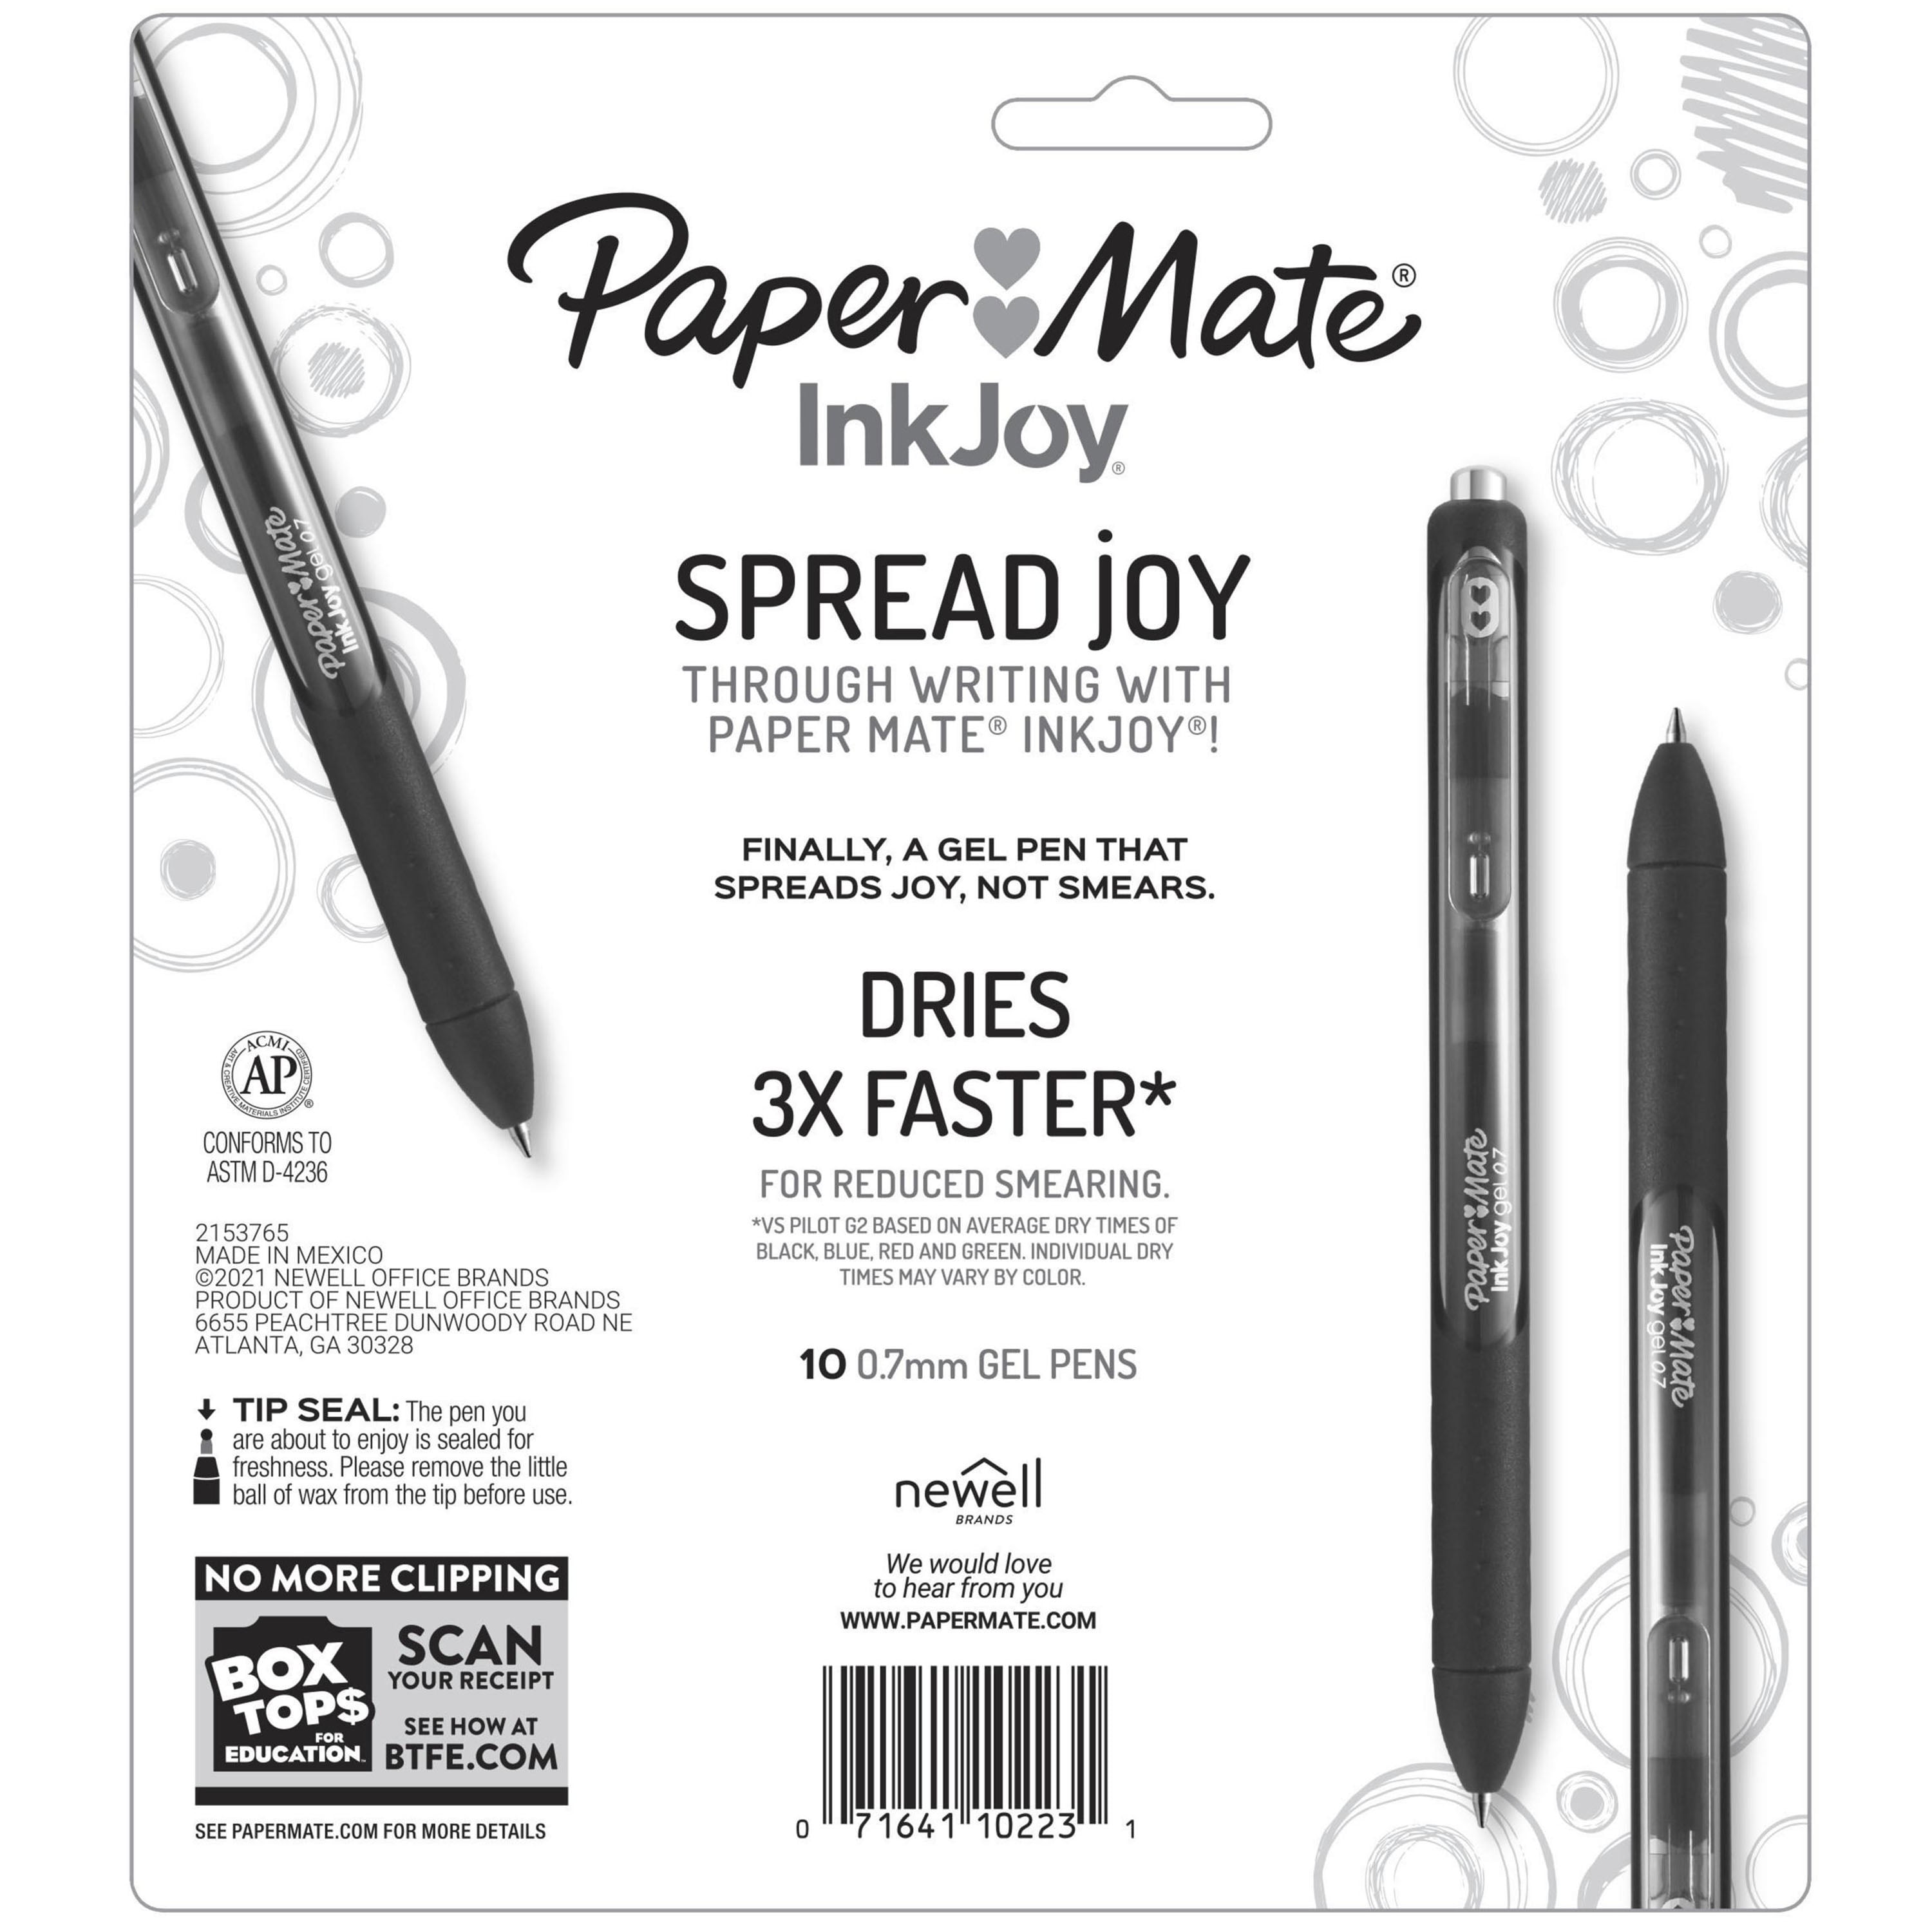 Park Lane Ultimate Gel Pen Set Assorted Colors - Pens - Paper Crafts & Scrapbooking